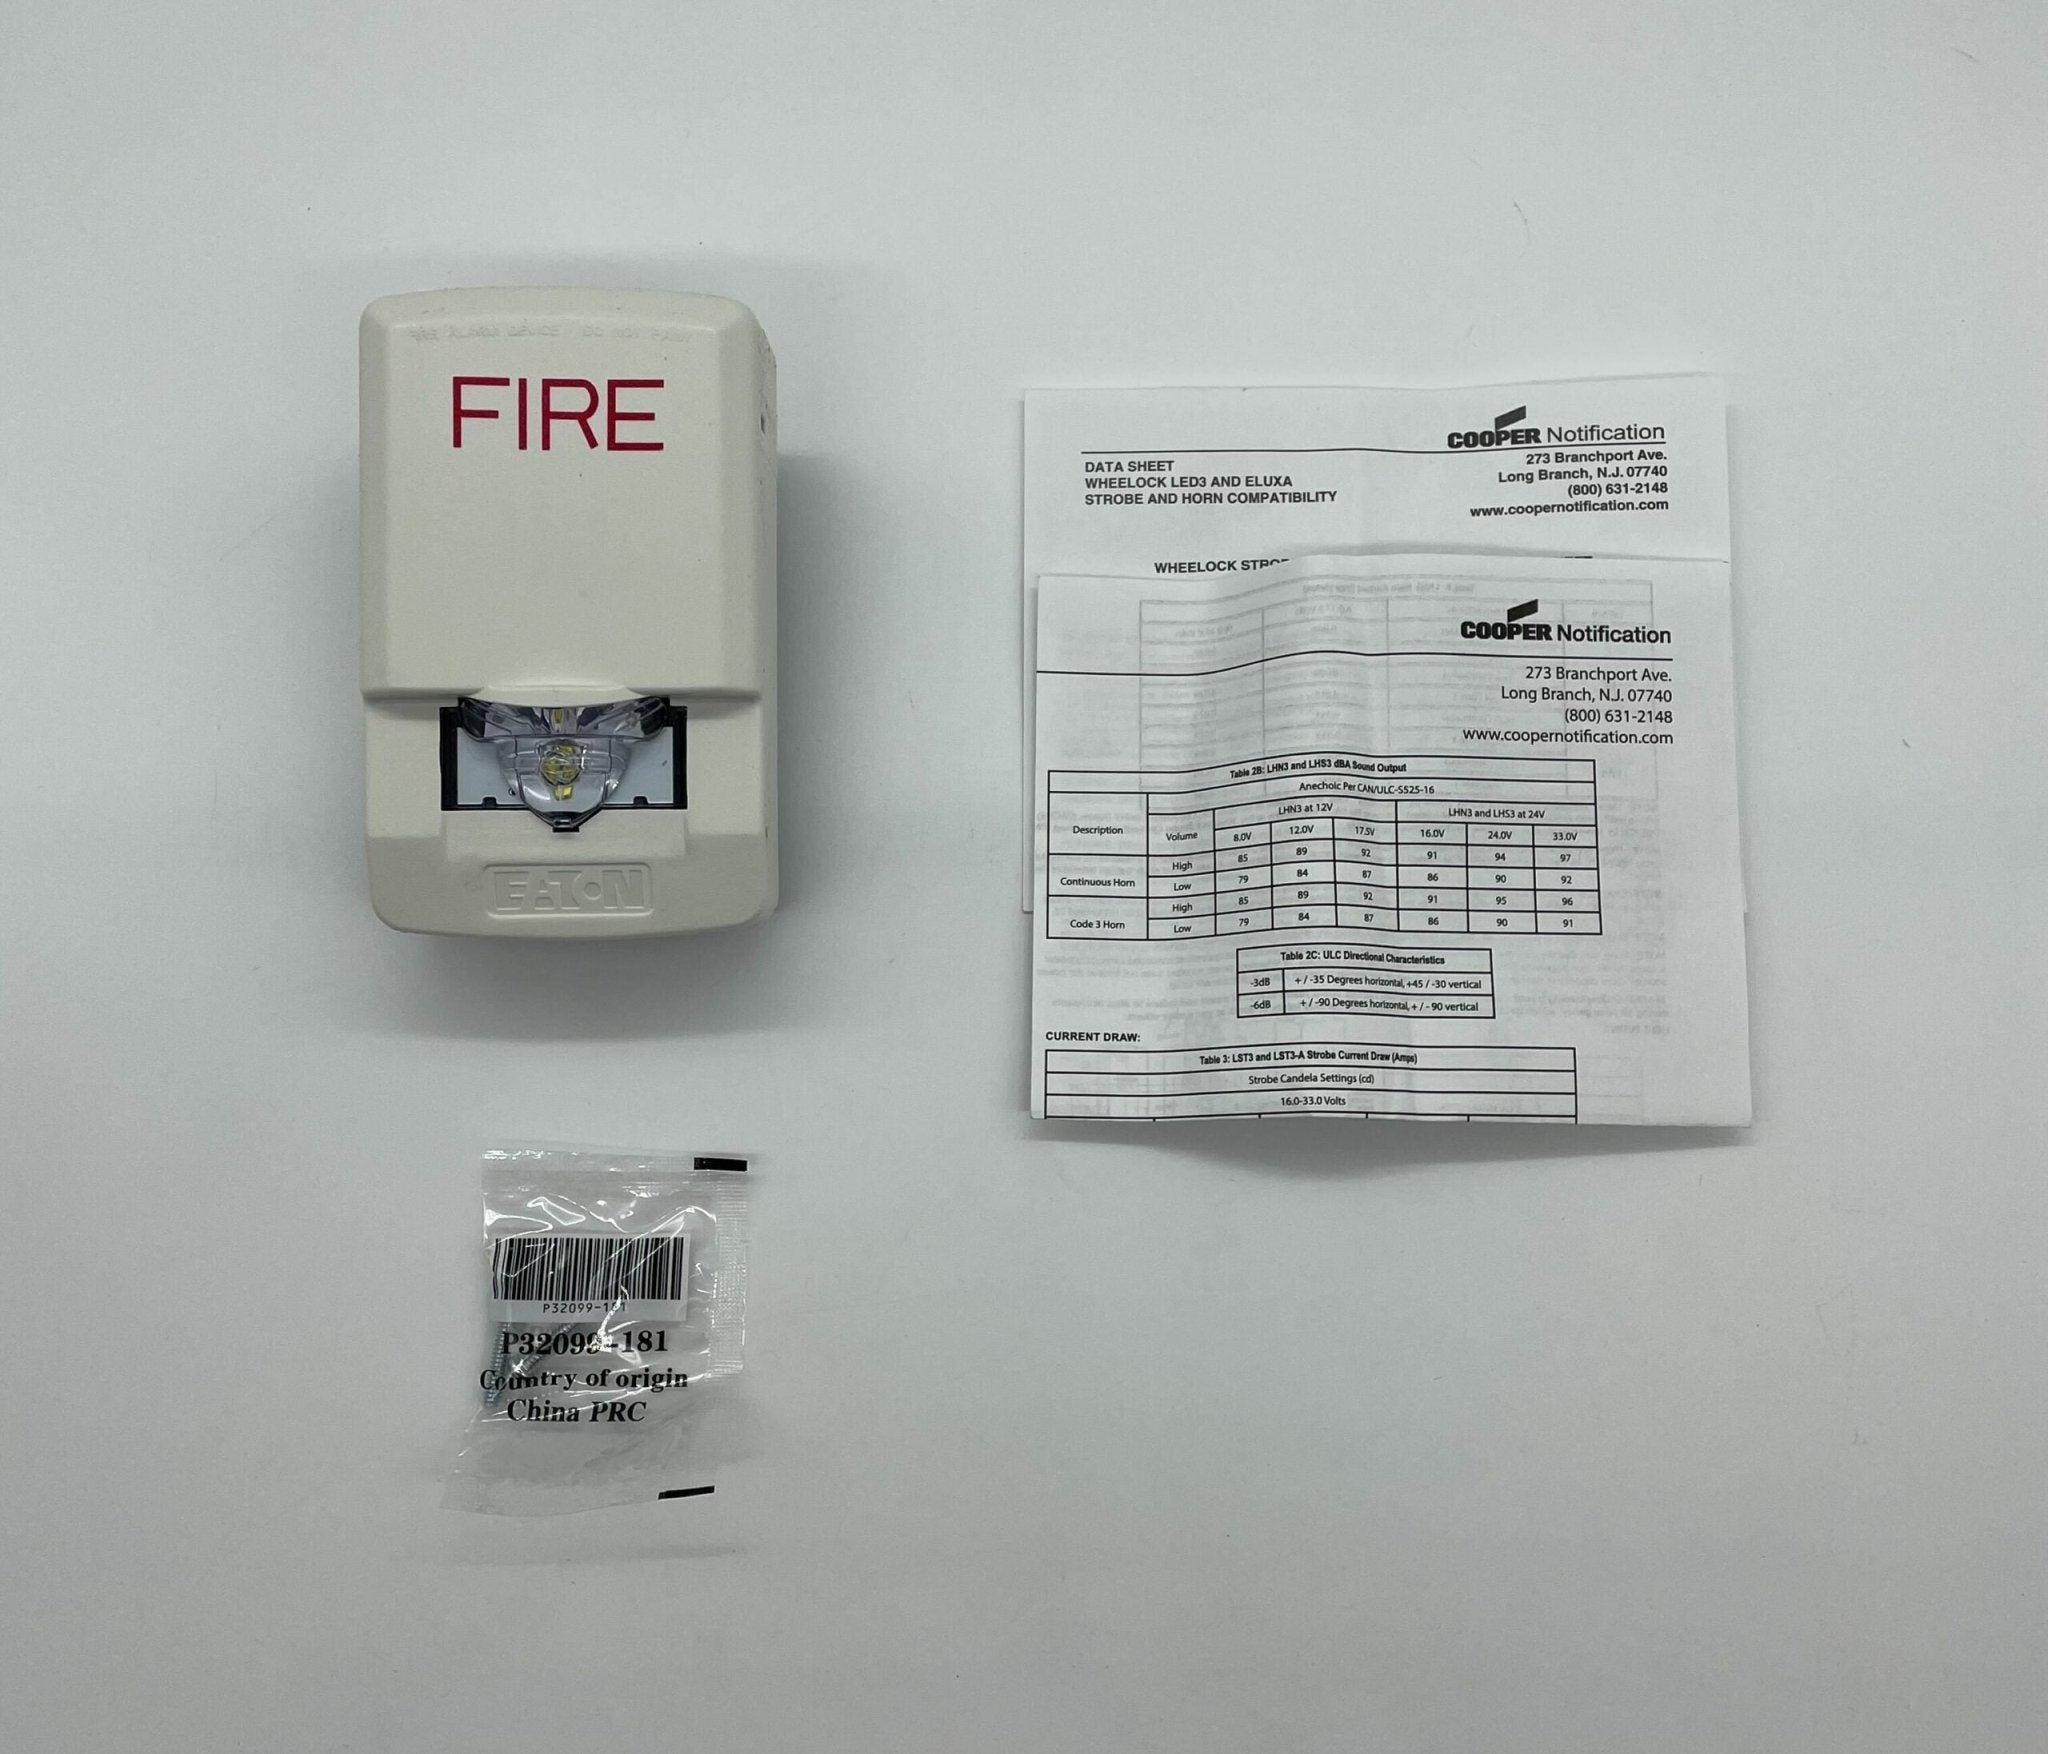 Wheelock LSTW3 - The Fire Alarm Supplier